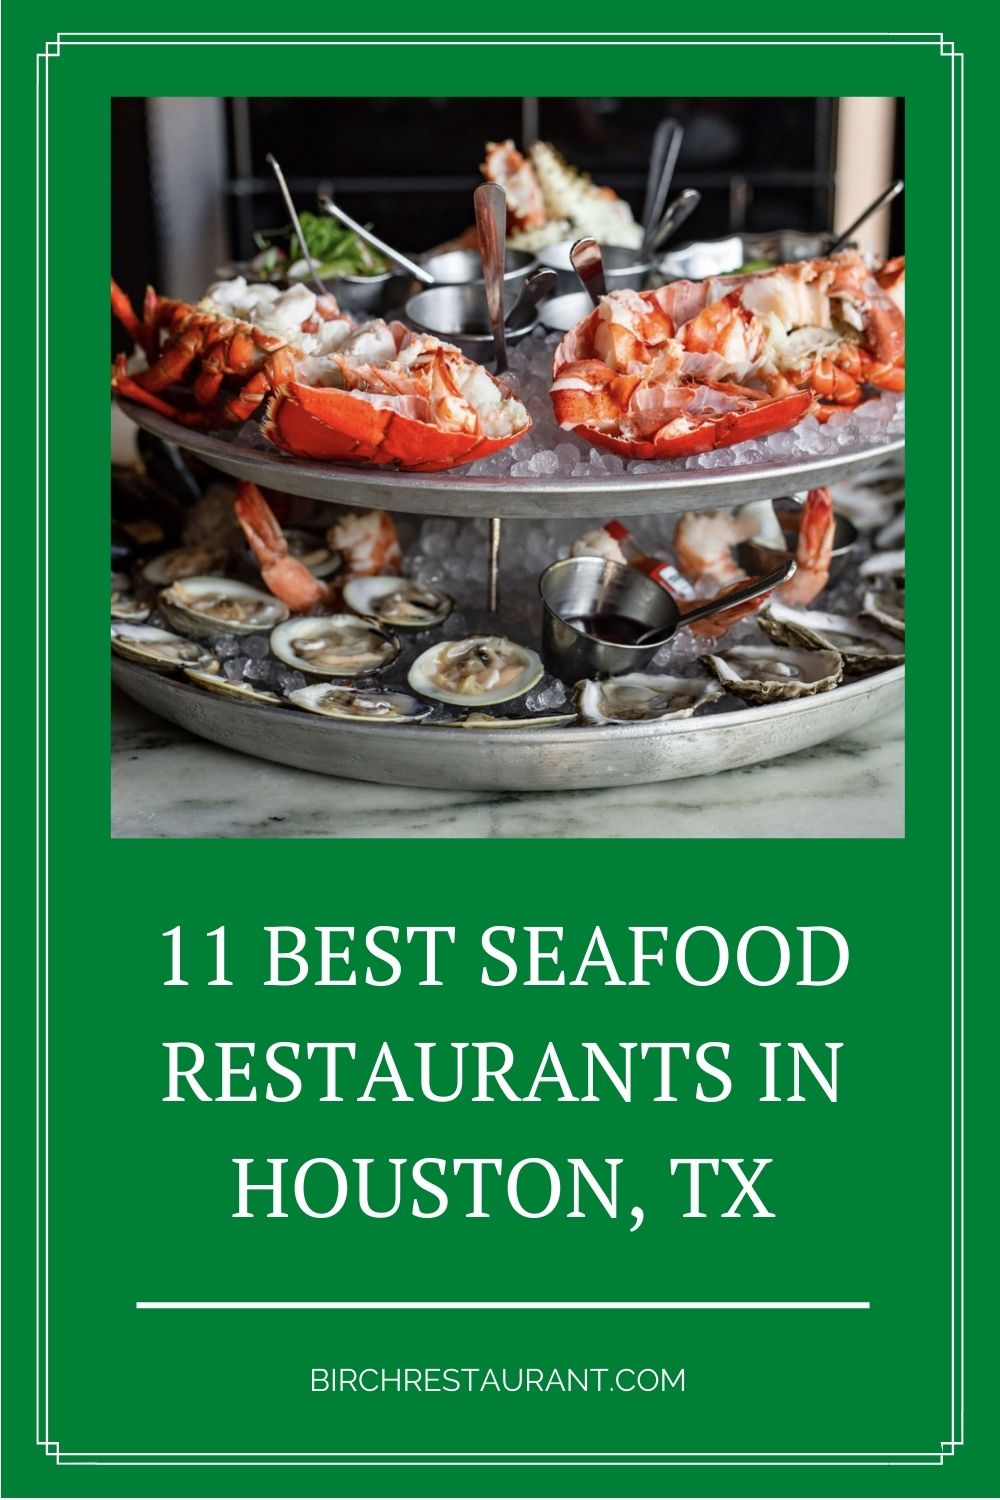 Best Seafood Restaurants in Houston